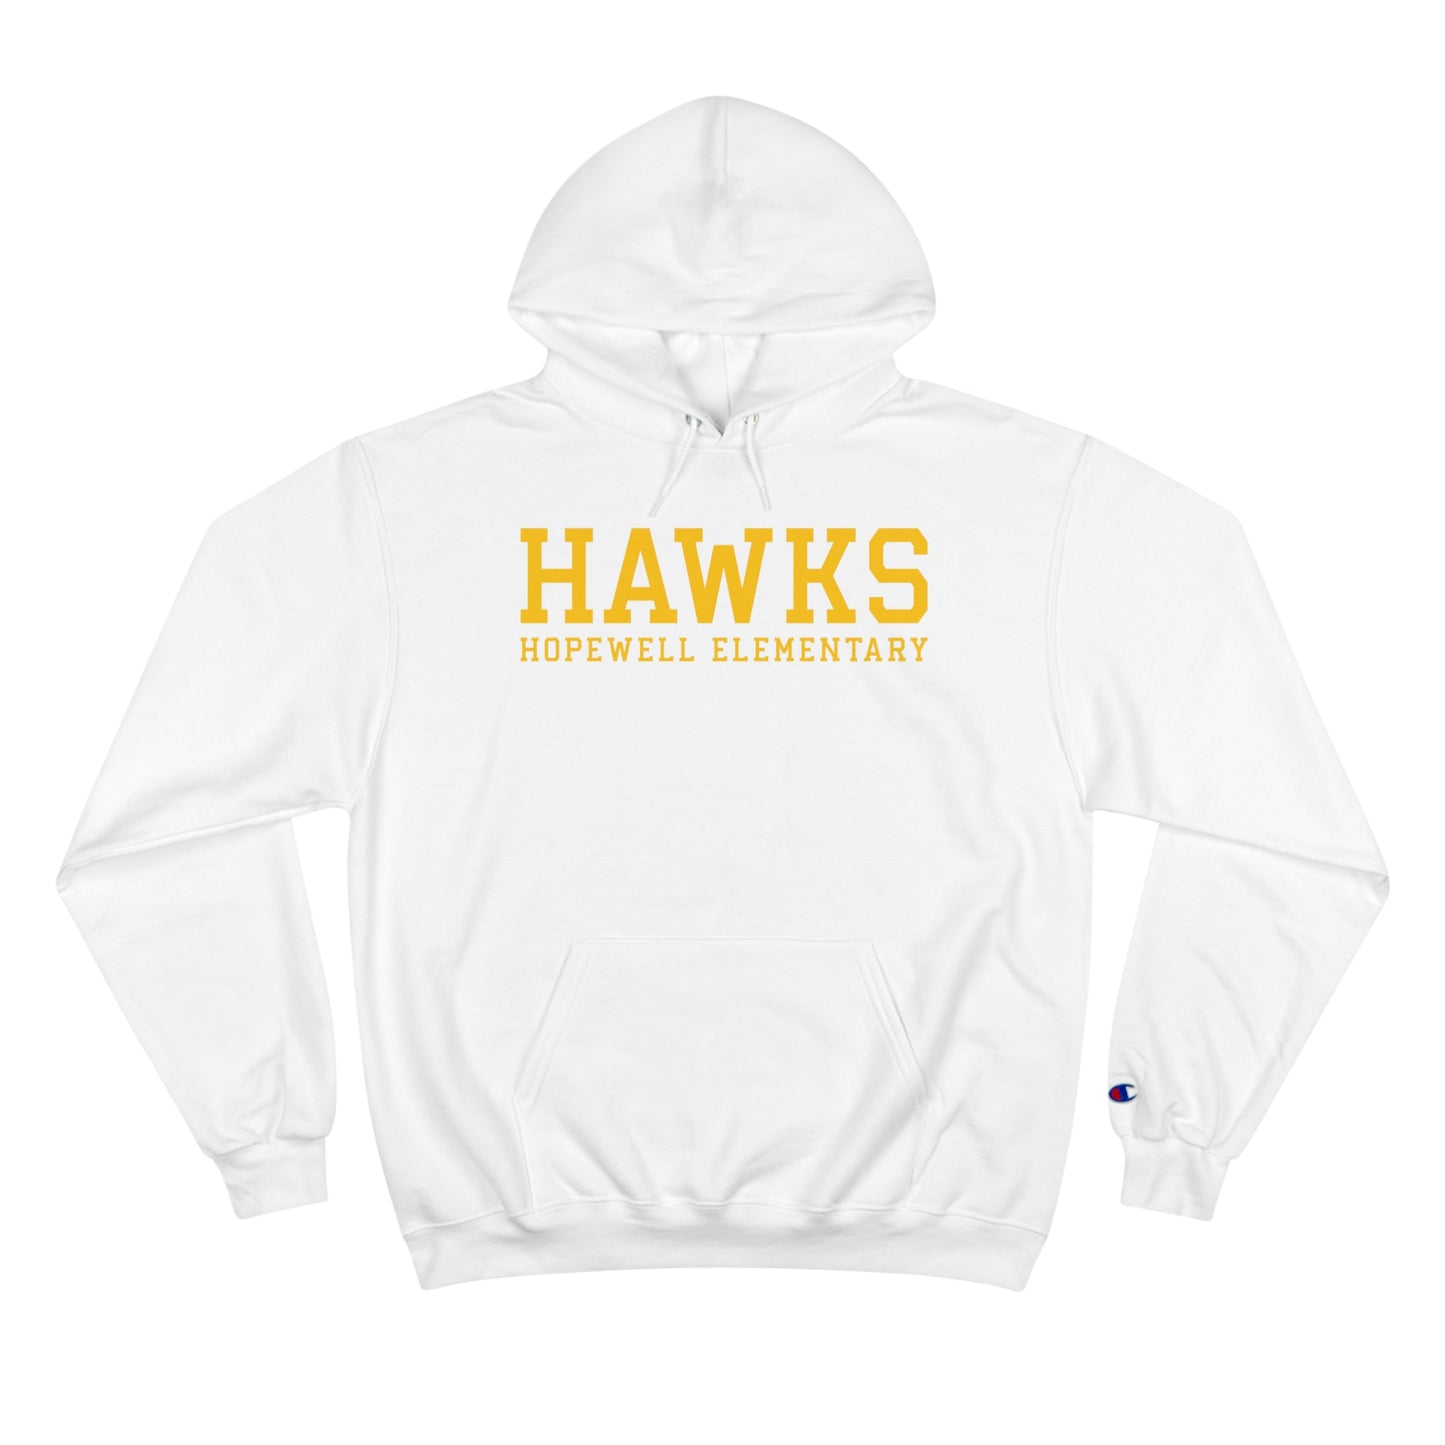 HAWKS_HOPEWELL ELEMENTARY-Champion Hoodie